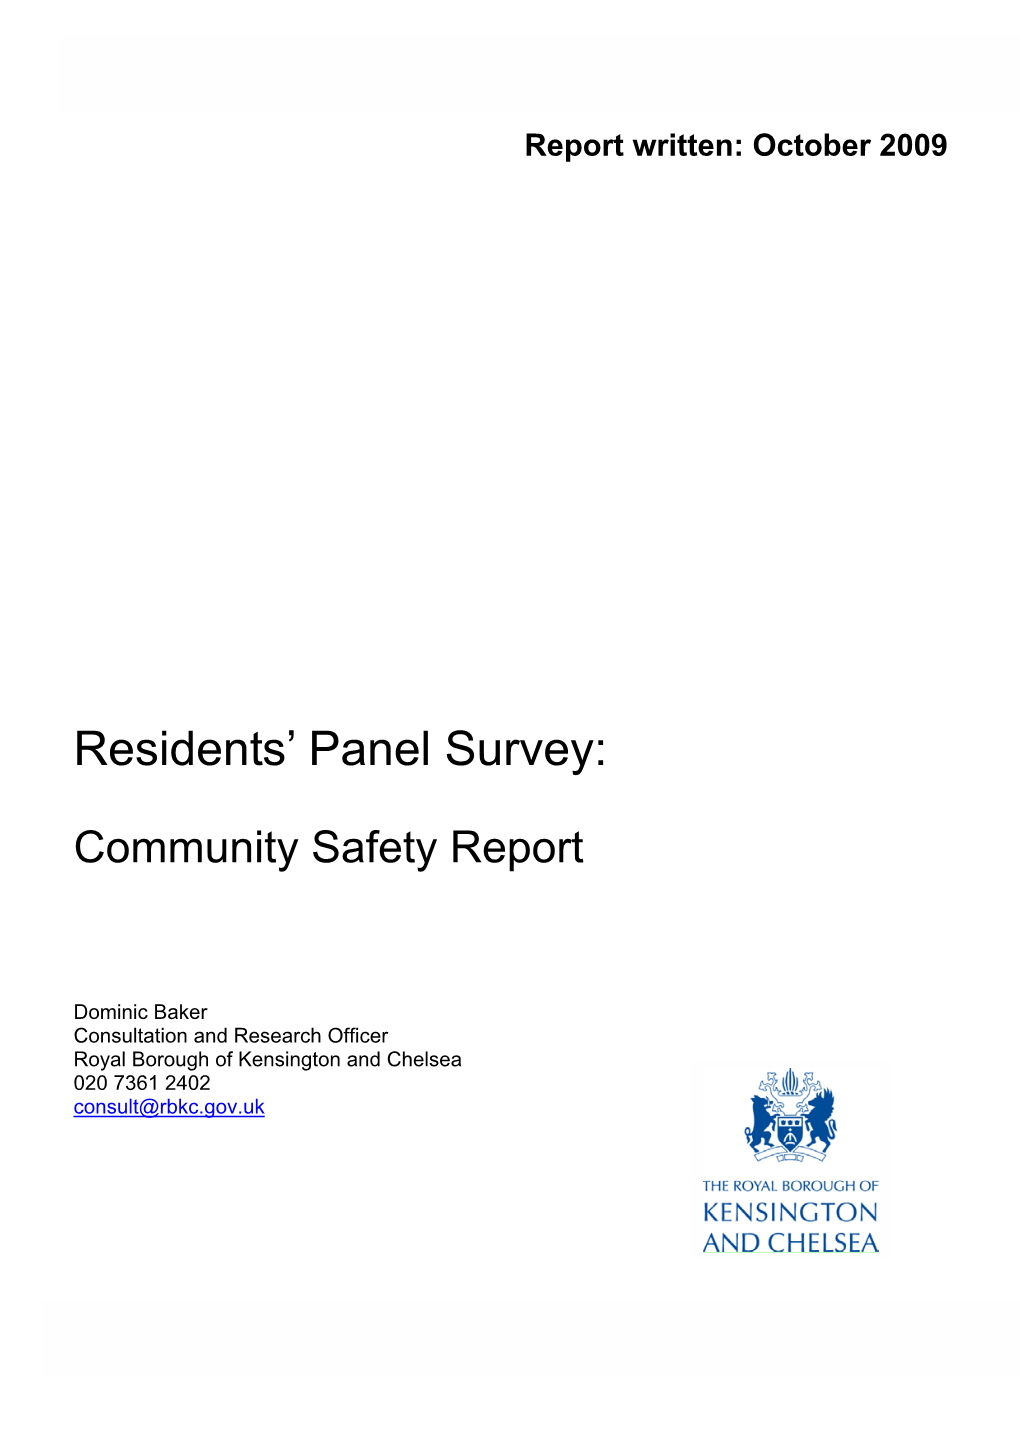 Residents' Panel Survey